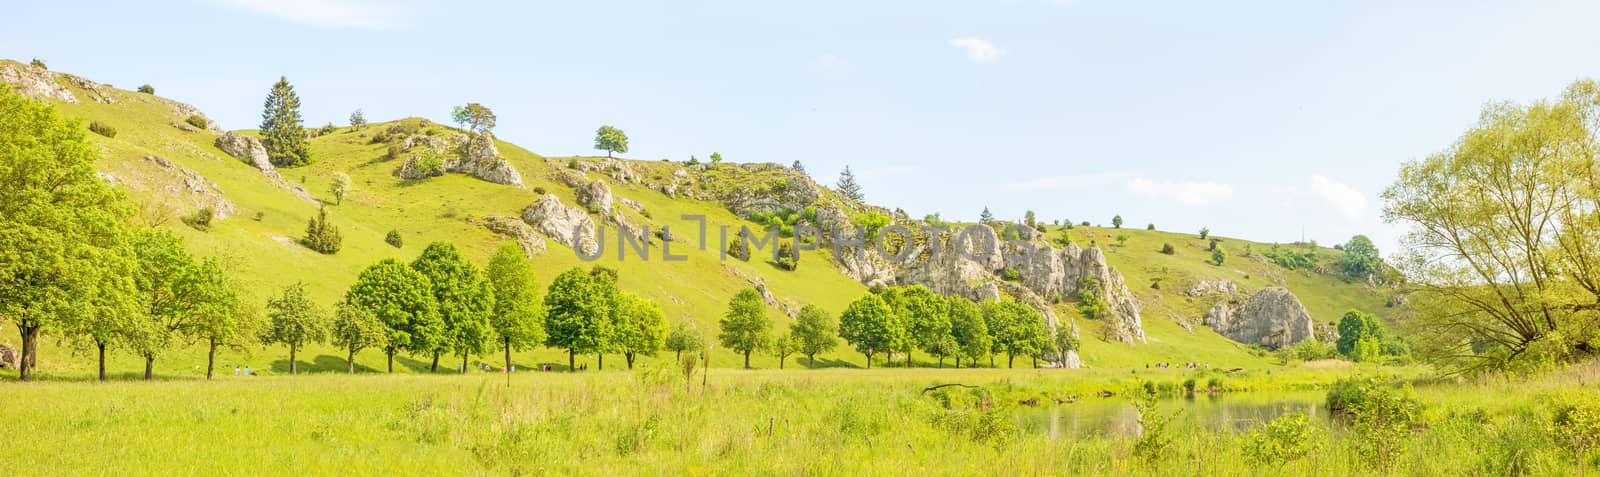 Valley Eselsburger Tal panorama - green meadow by aldorado